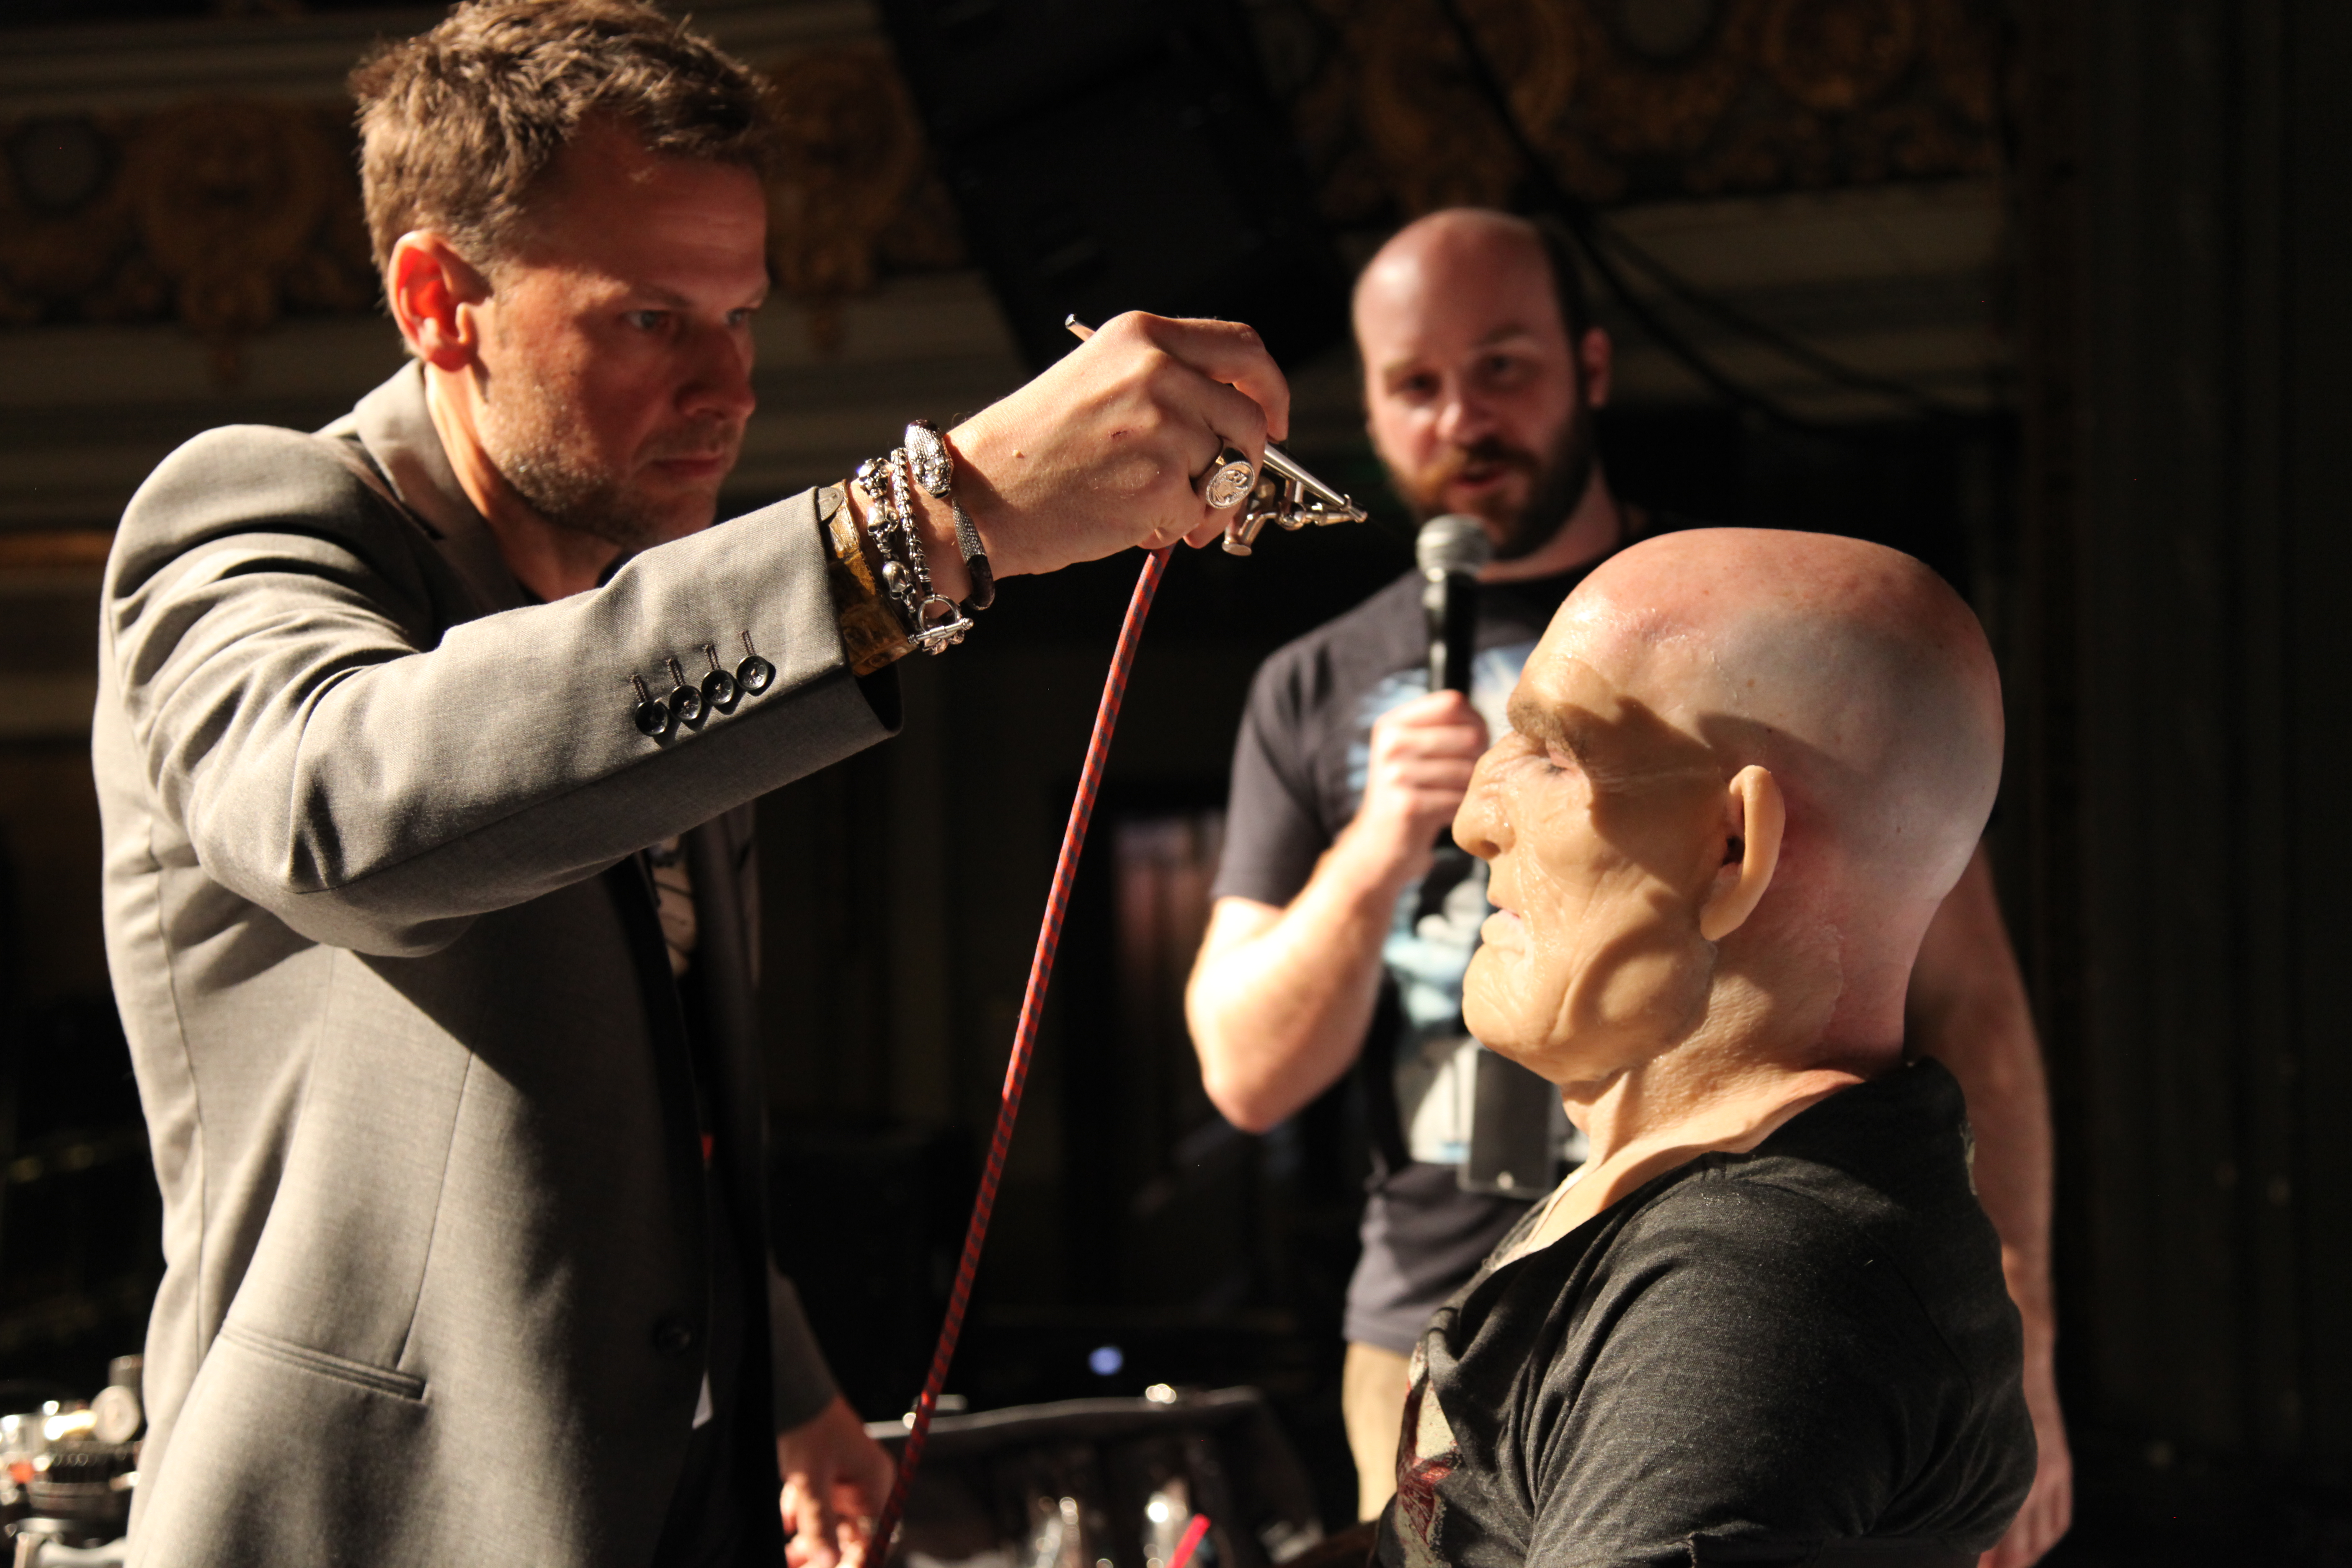 Onstage at Kirk Hammett's Fear FestEVIL! Joel Harlow (left), Jack Bennett (background) and Scott Ian (in makeup).